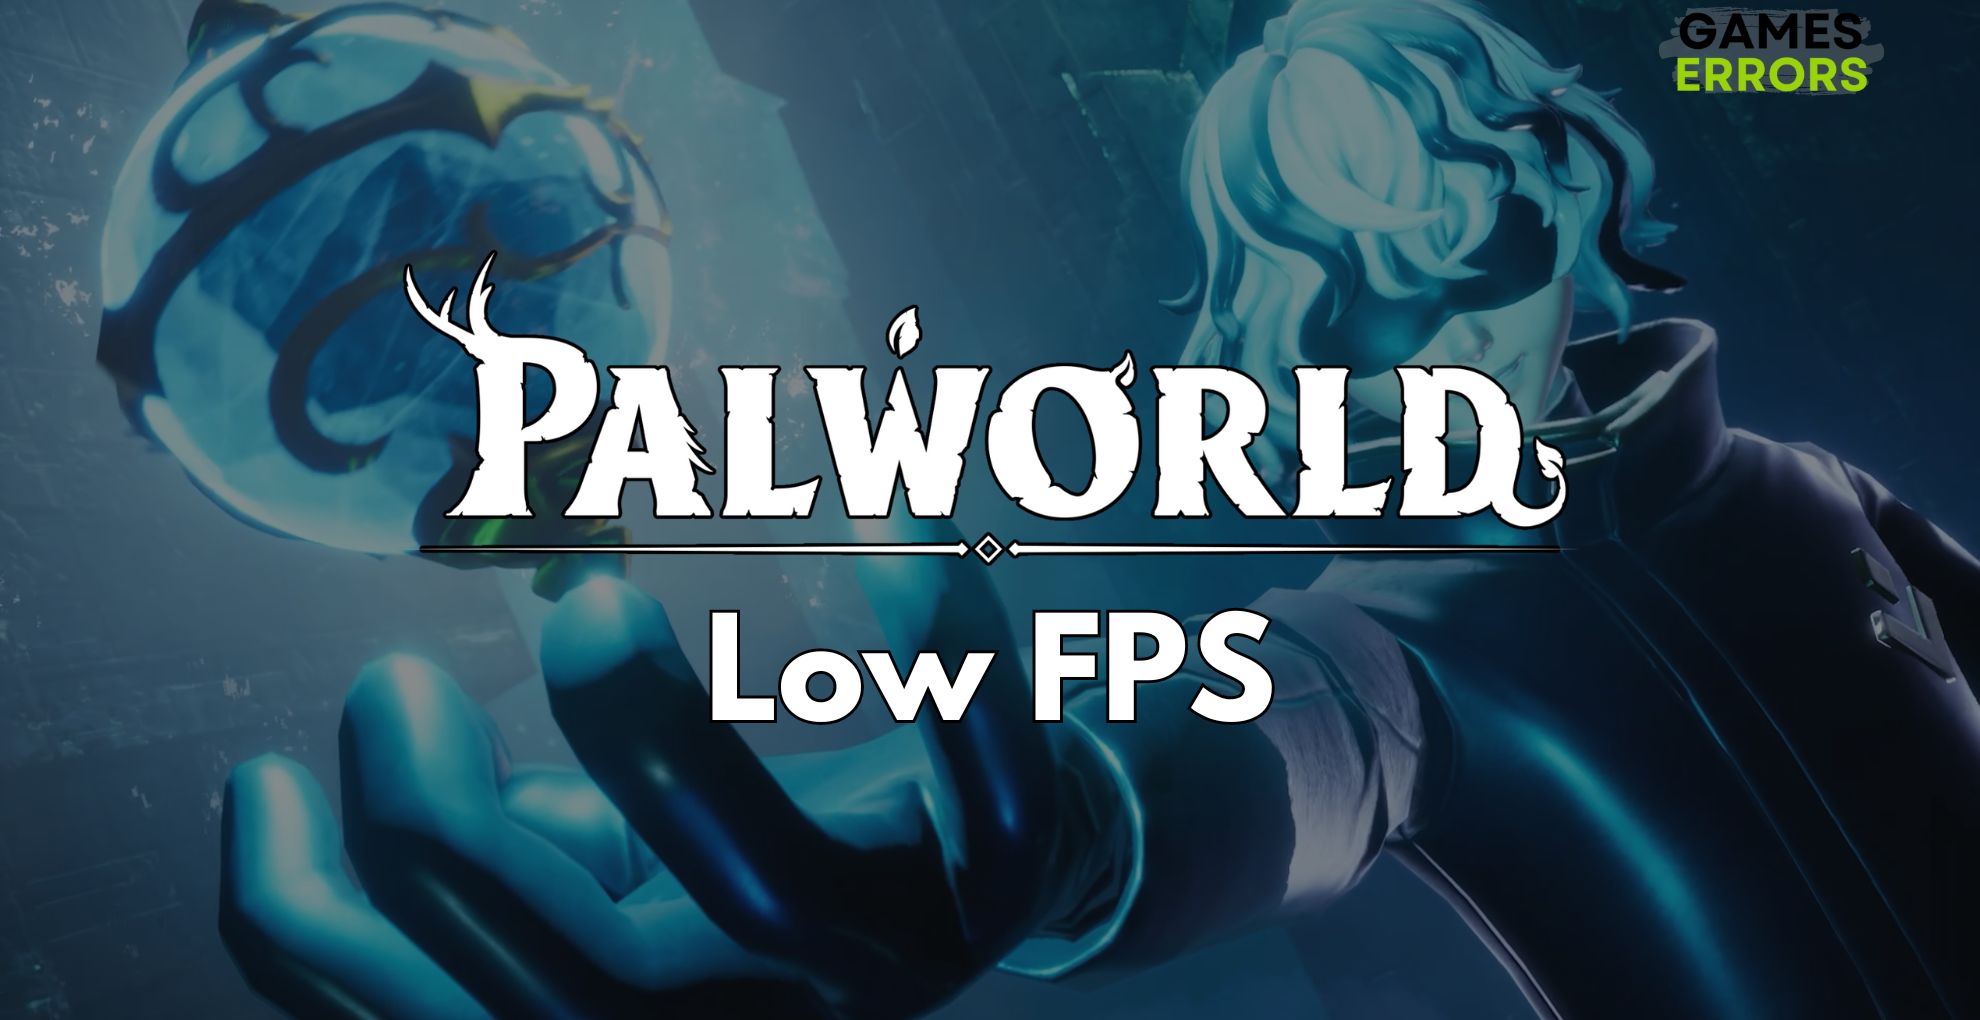 Palworld Low FPS